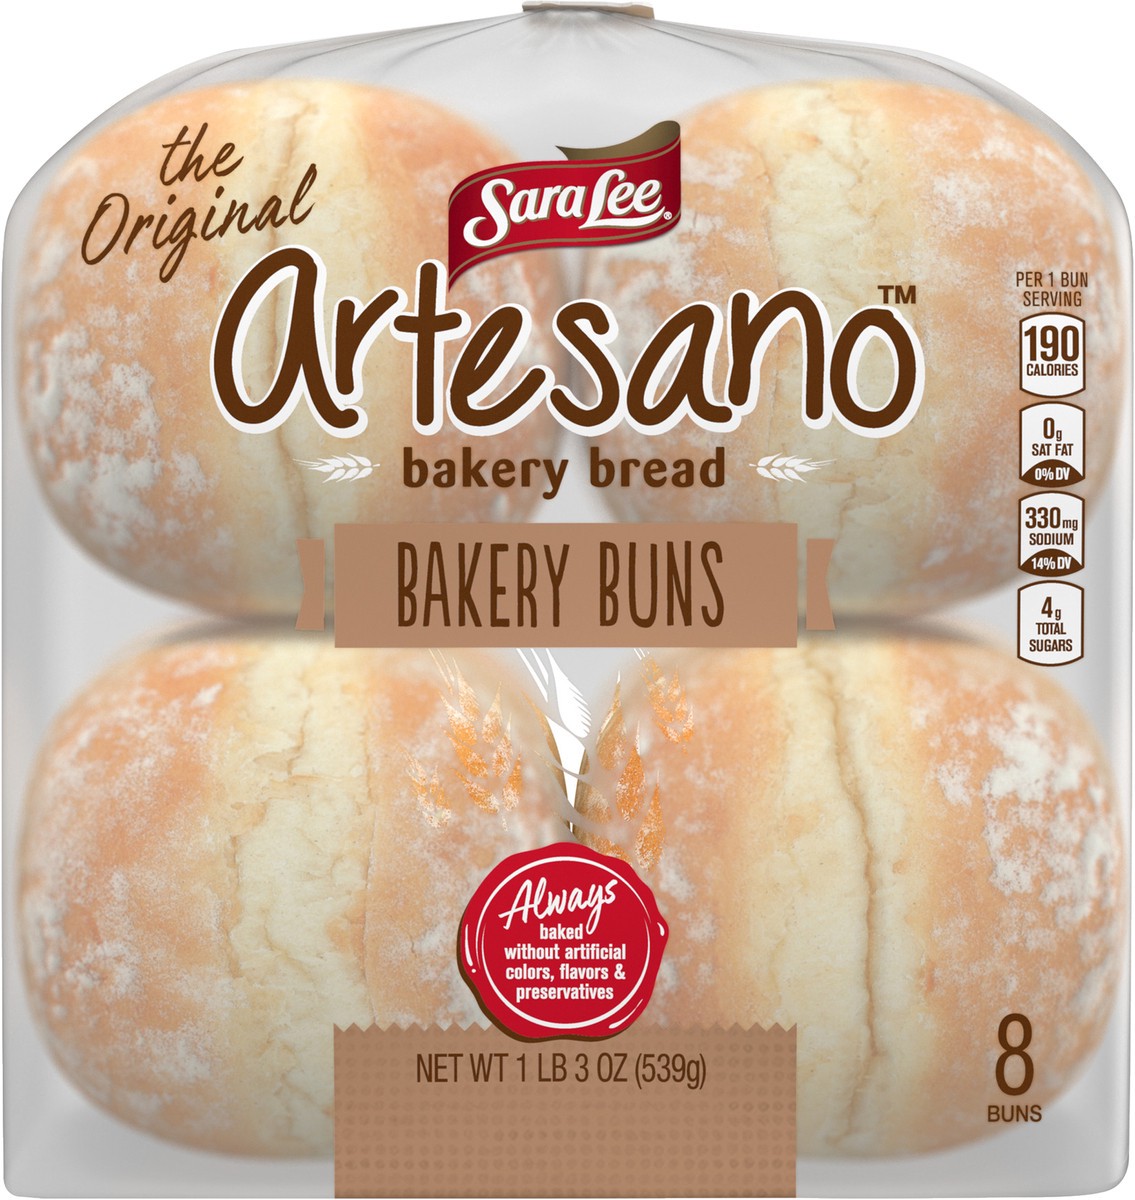 Sara Lee Artesano The Original Bakery Bread - Shop Sliced Bread at H-E-B